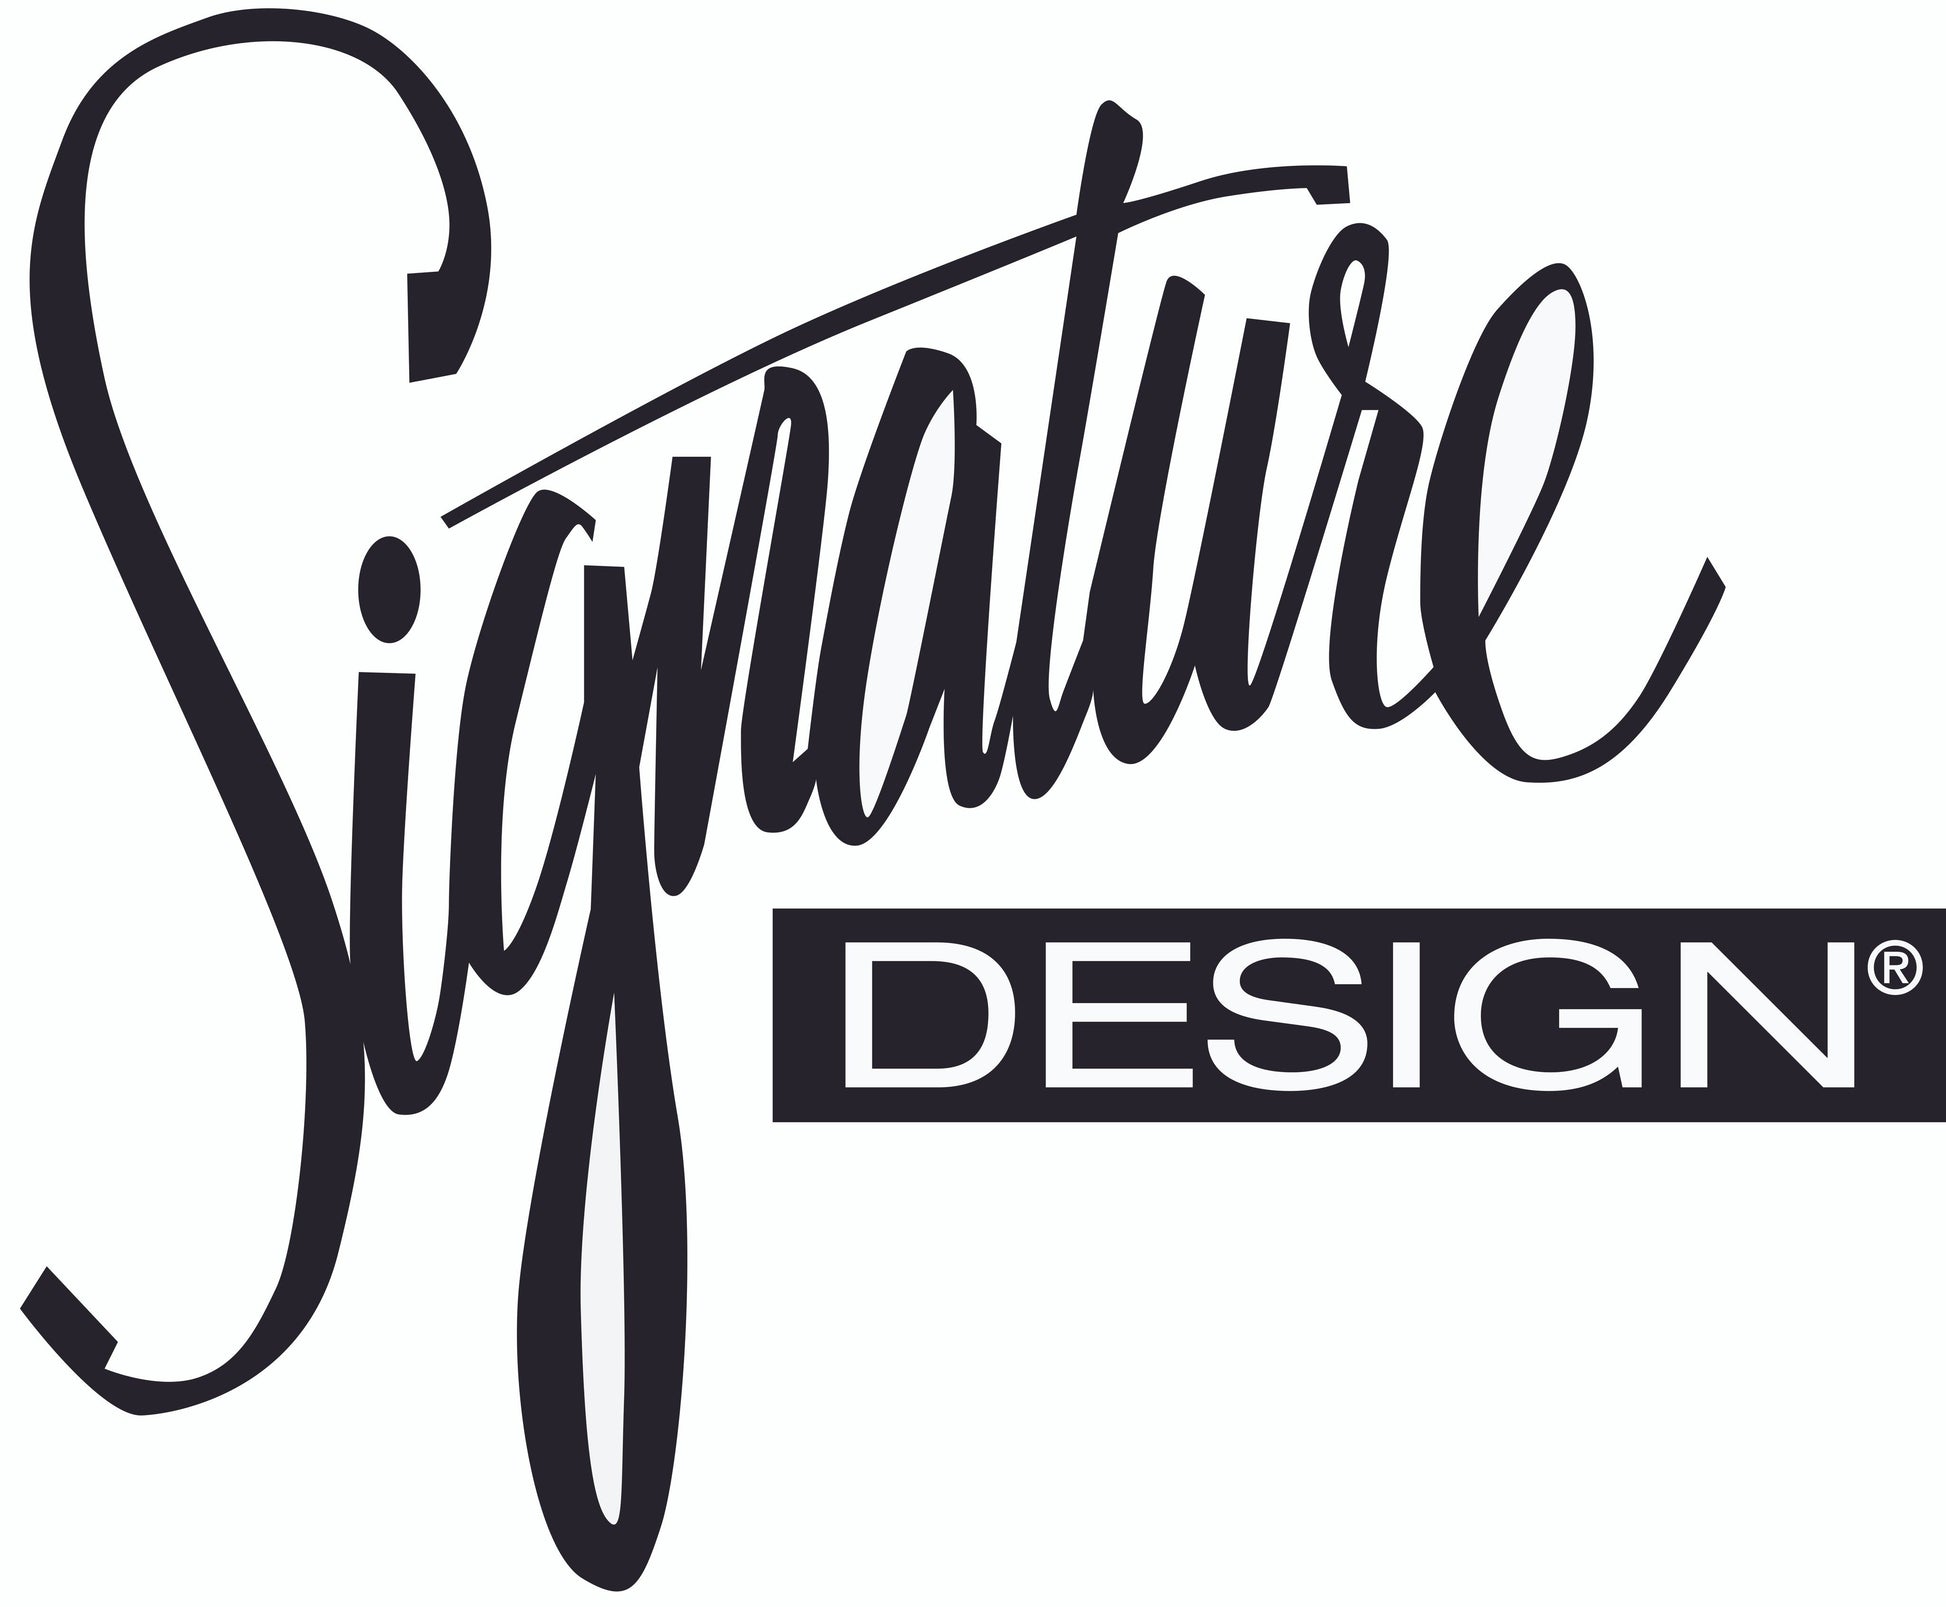 Garinton Ceramic Table Lamp (1/CN) Signature Design by Ashley®